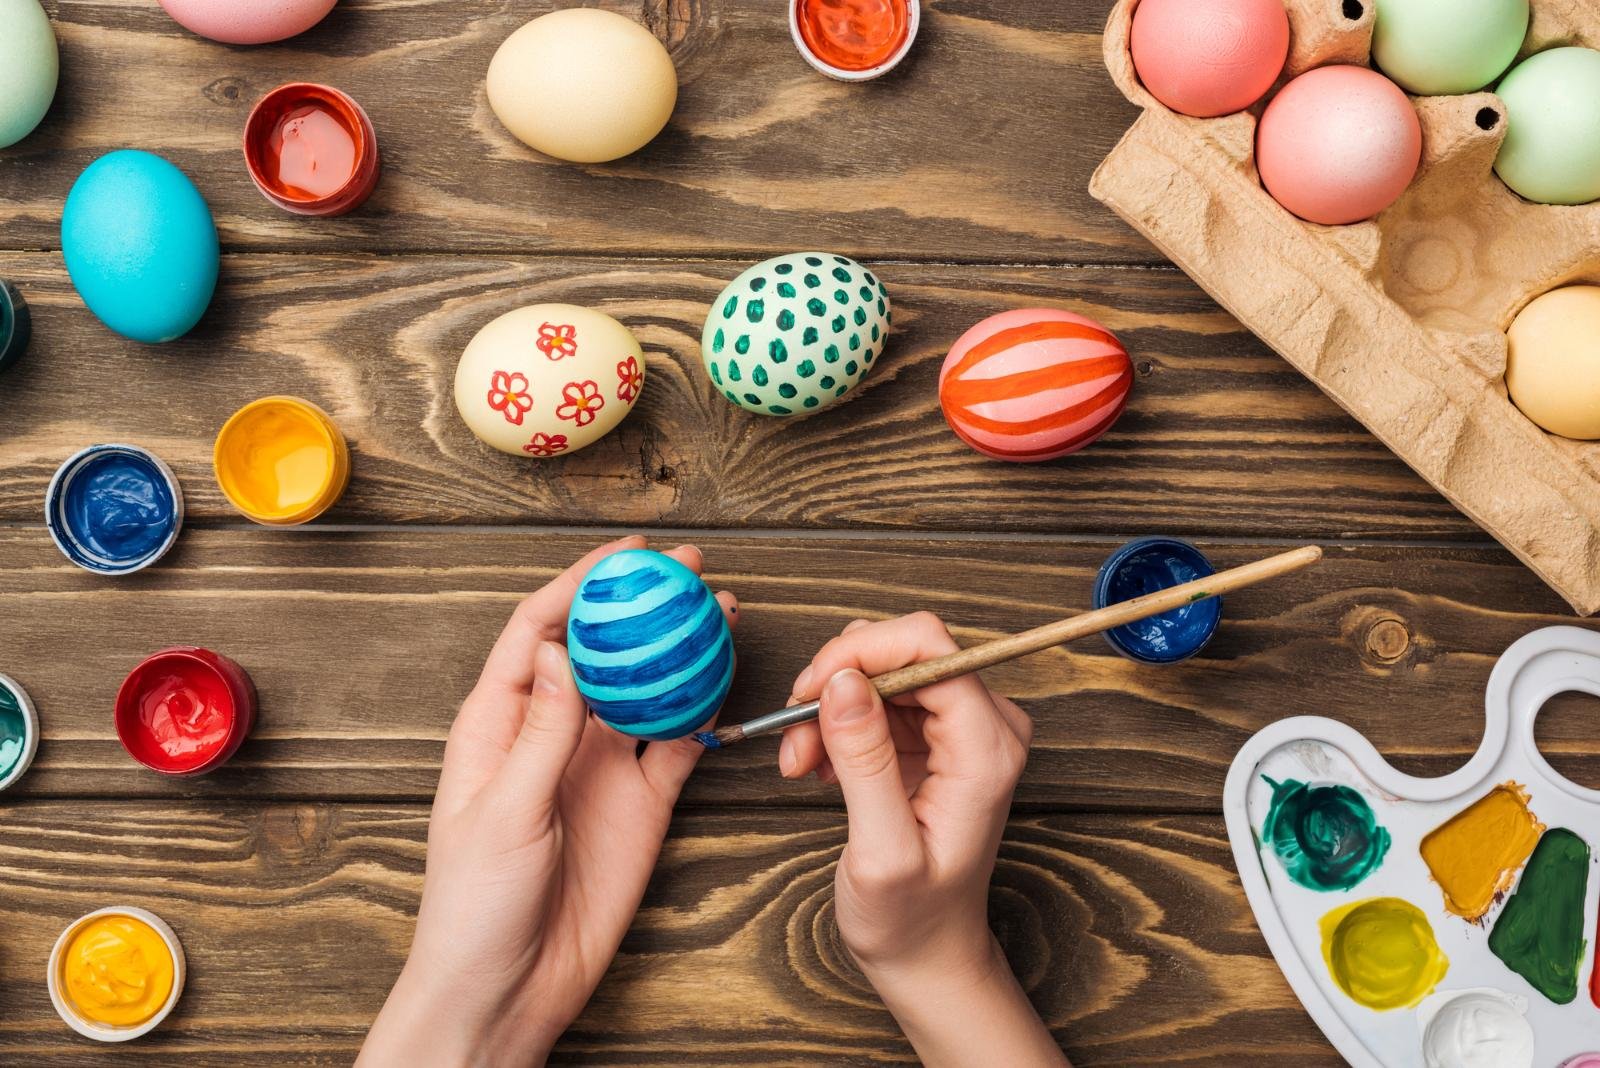 Дети красили яйца. Покрасить яйца на Пасху. Красиво покрасить яйца на Пасху. Способы крашения яиц на Пасху традиционно. Красим яйца на Пасху.